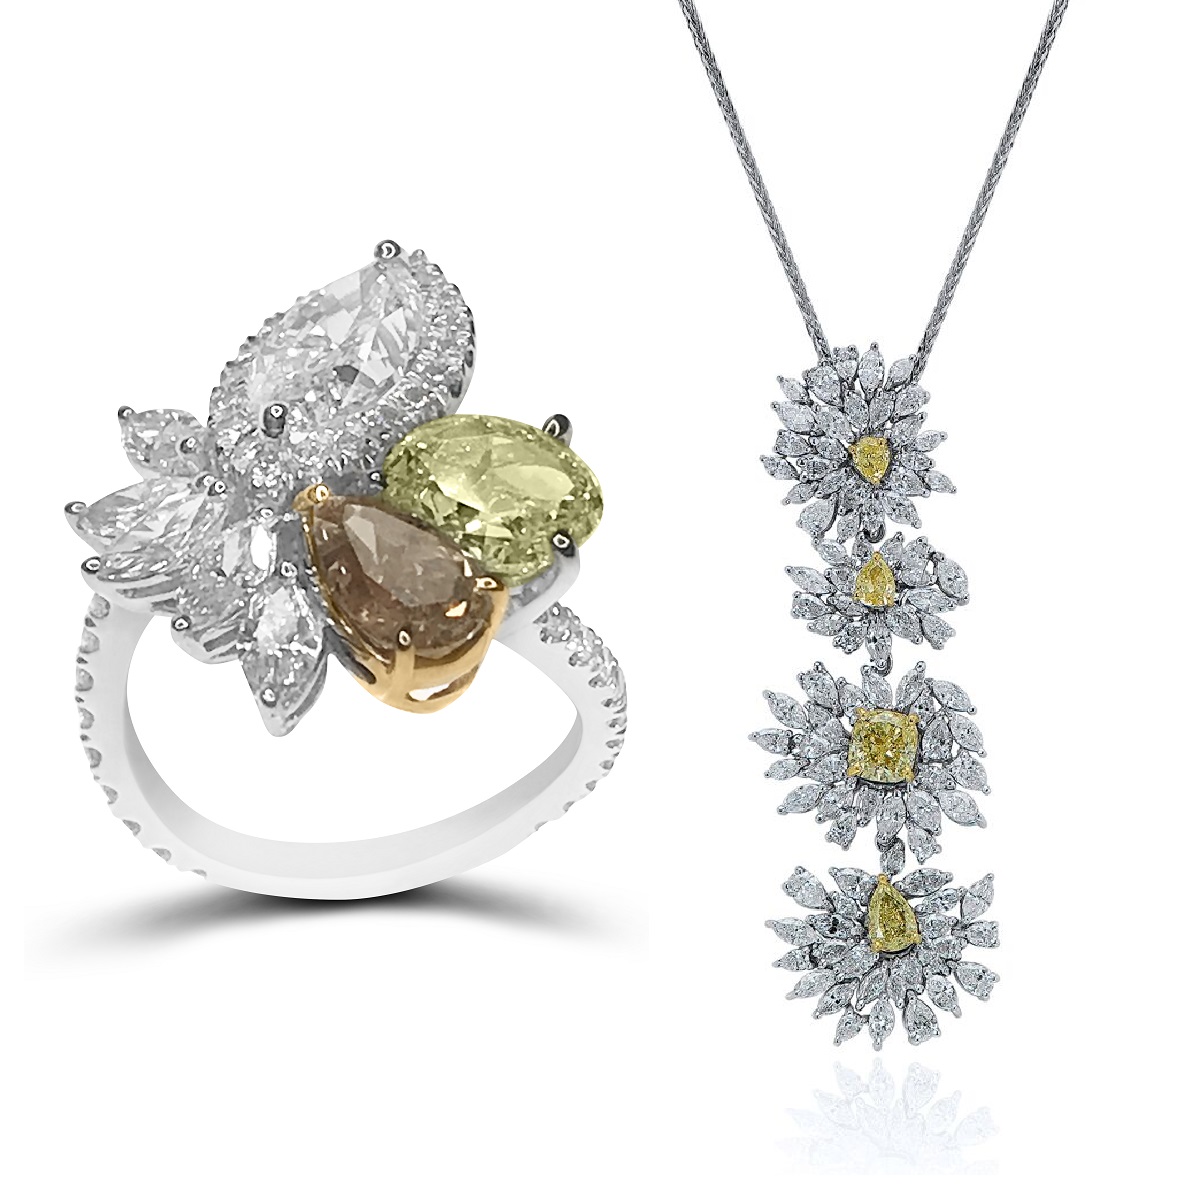 Mixed Fancy & Fancy Light Yellow Diamond Ring & Pendant Set (13.72ct TW)